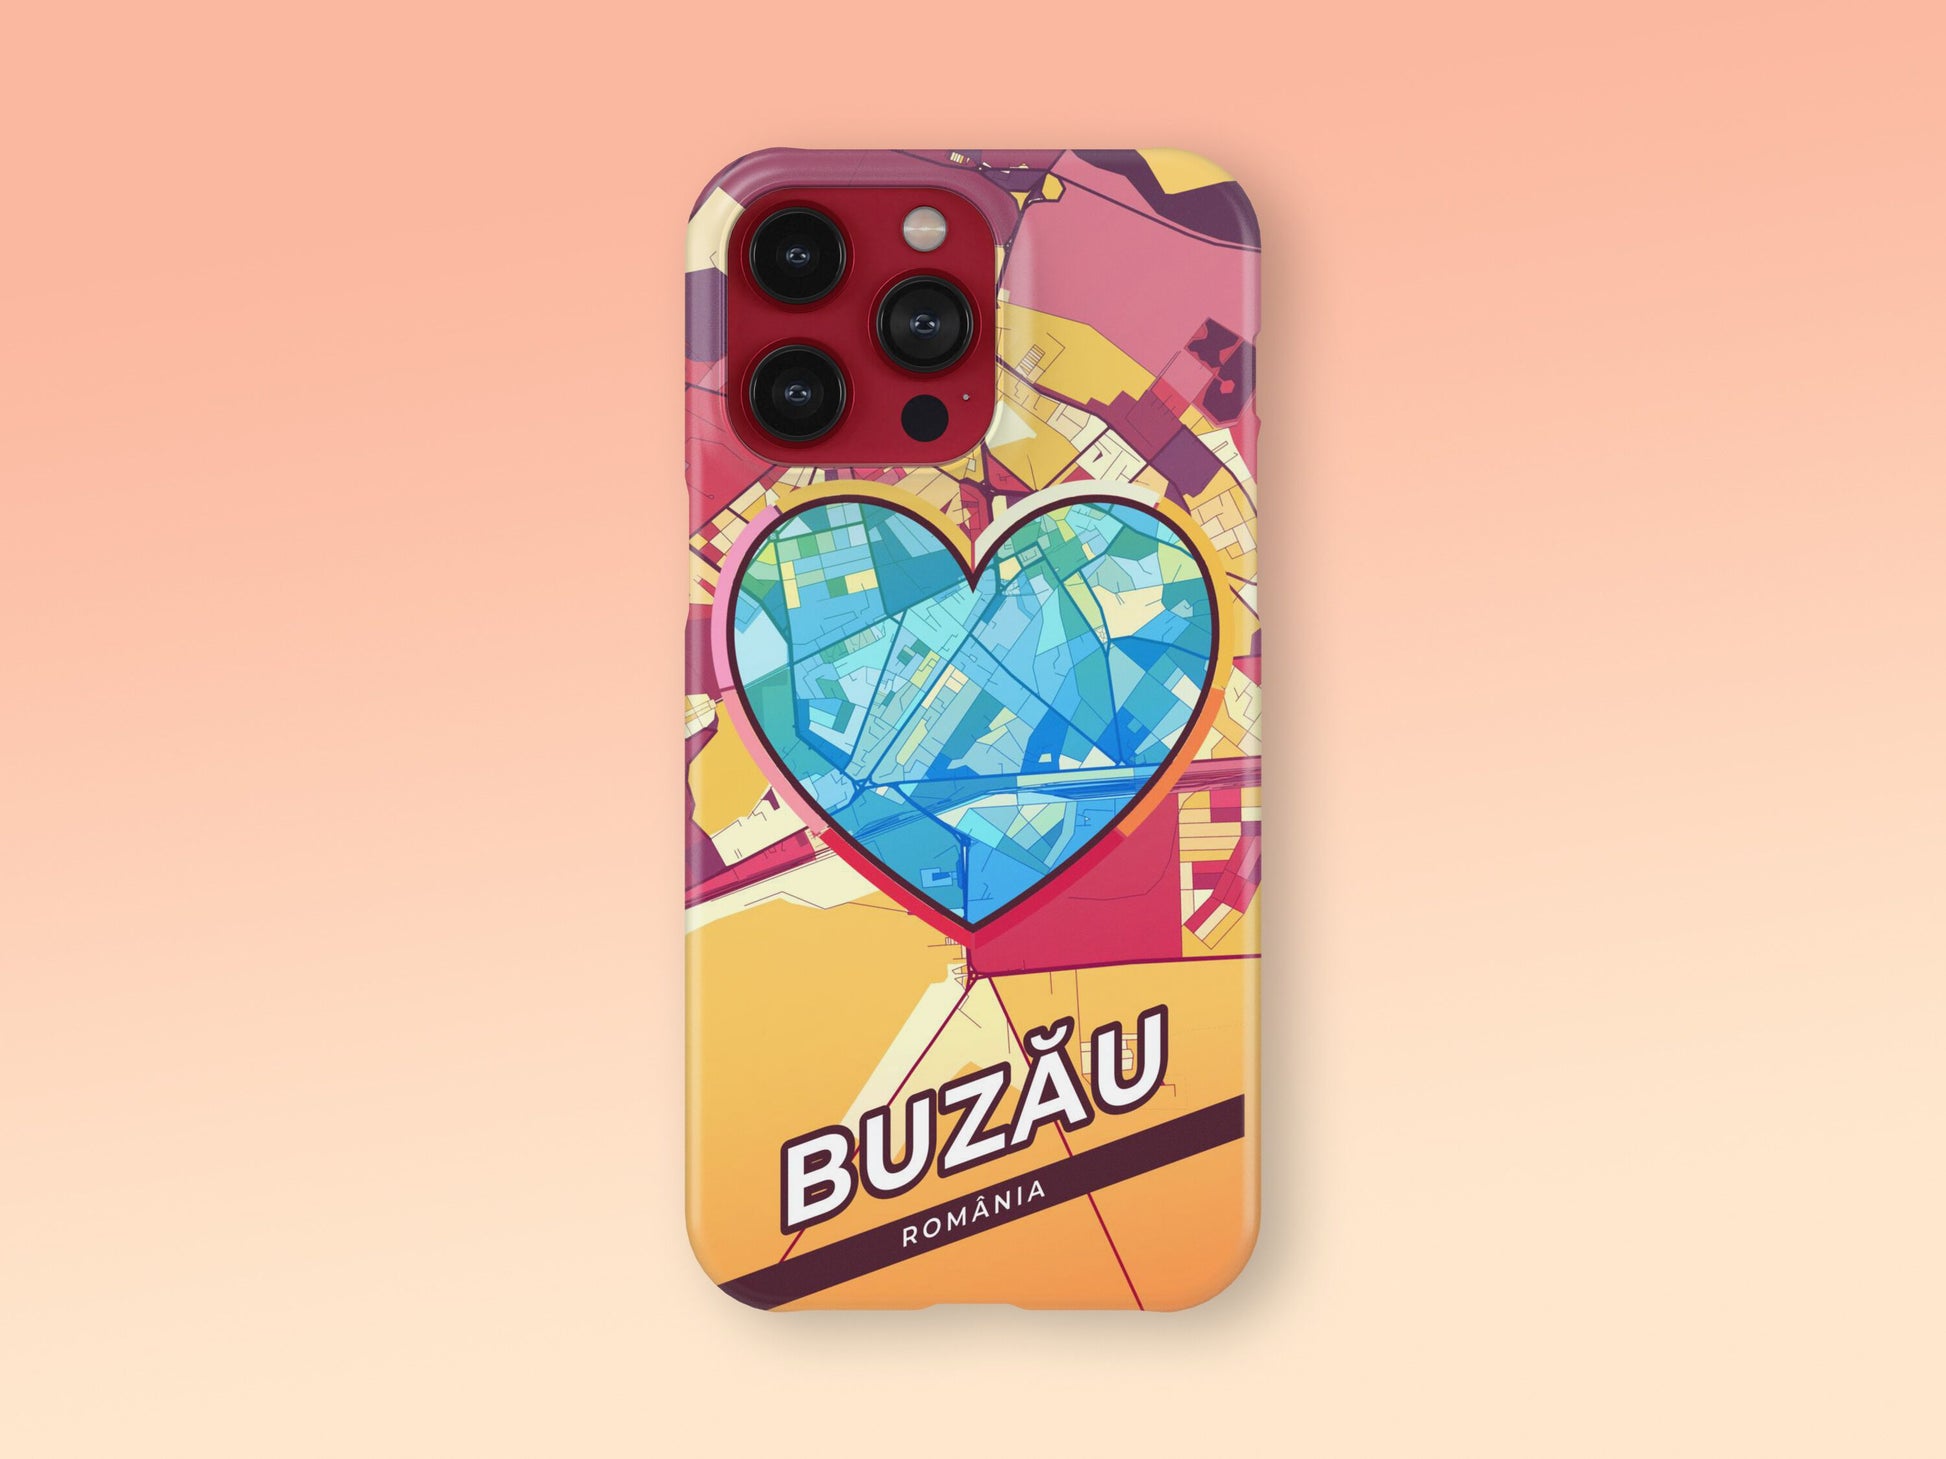 Buzău Romania slim phone case with colorful icon. Birthday, wedding or housewarming gift. Couple match cases. 2